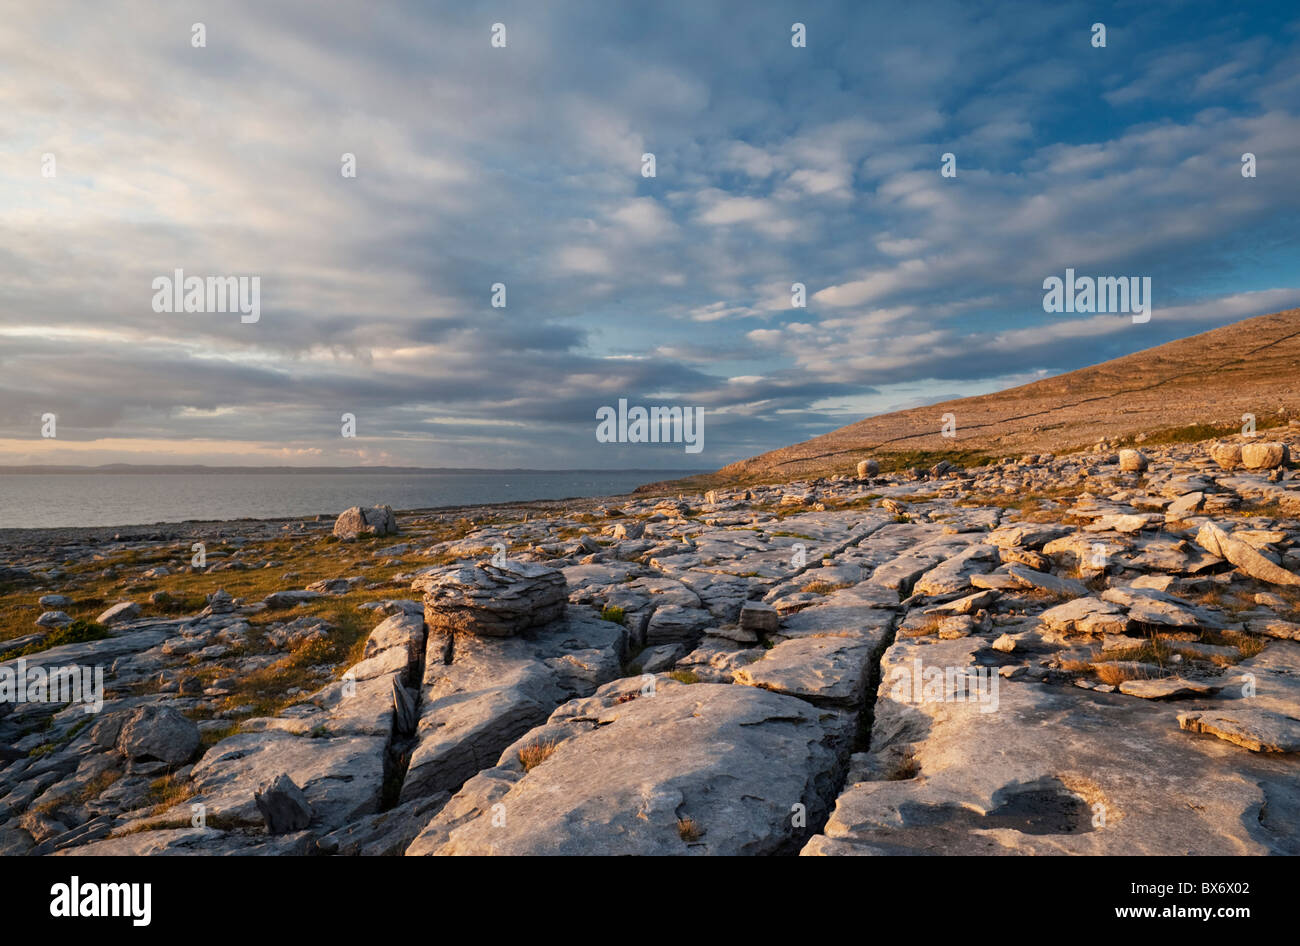 Pavimentazione di pietra calcarea e massi erratici in The Burren, vicino a testa nera, Co Clare, Irlanda Foto Stock